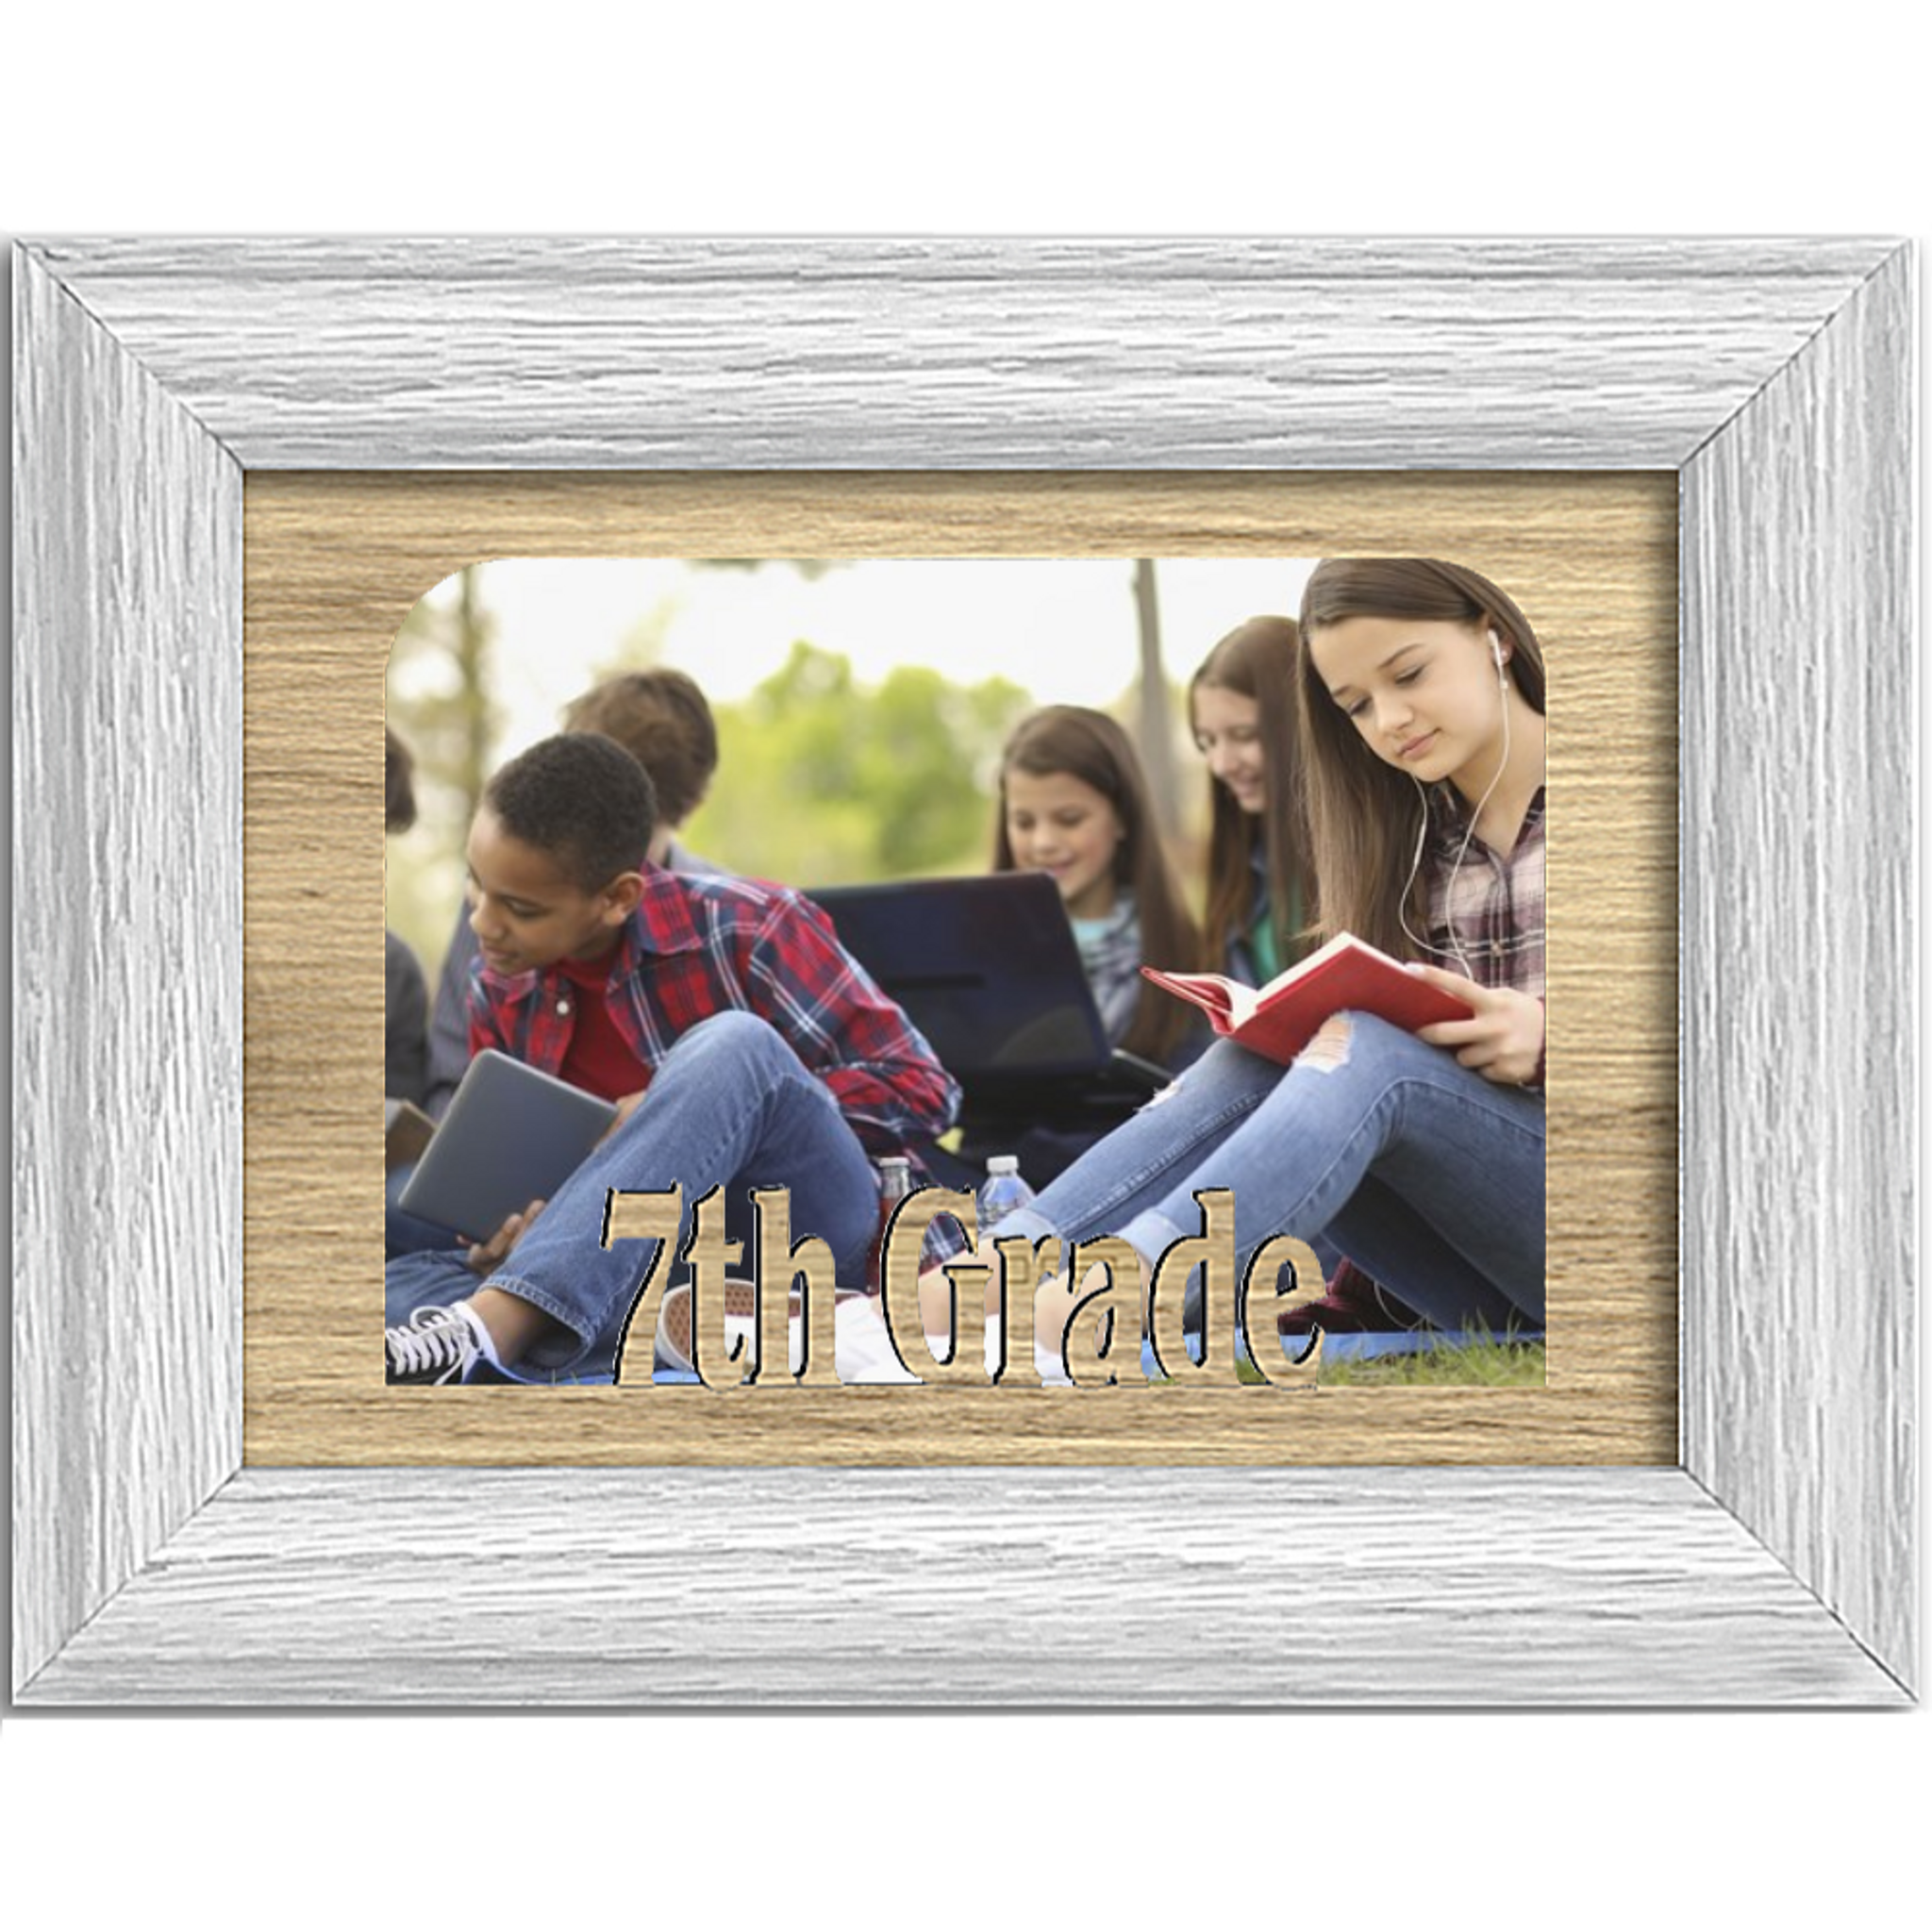 7th Grade Tabletop Photo Frame